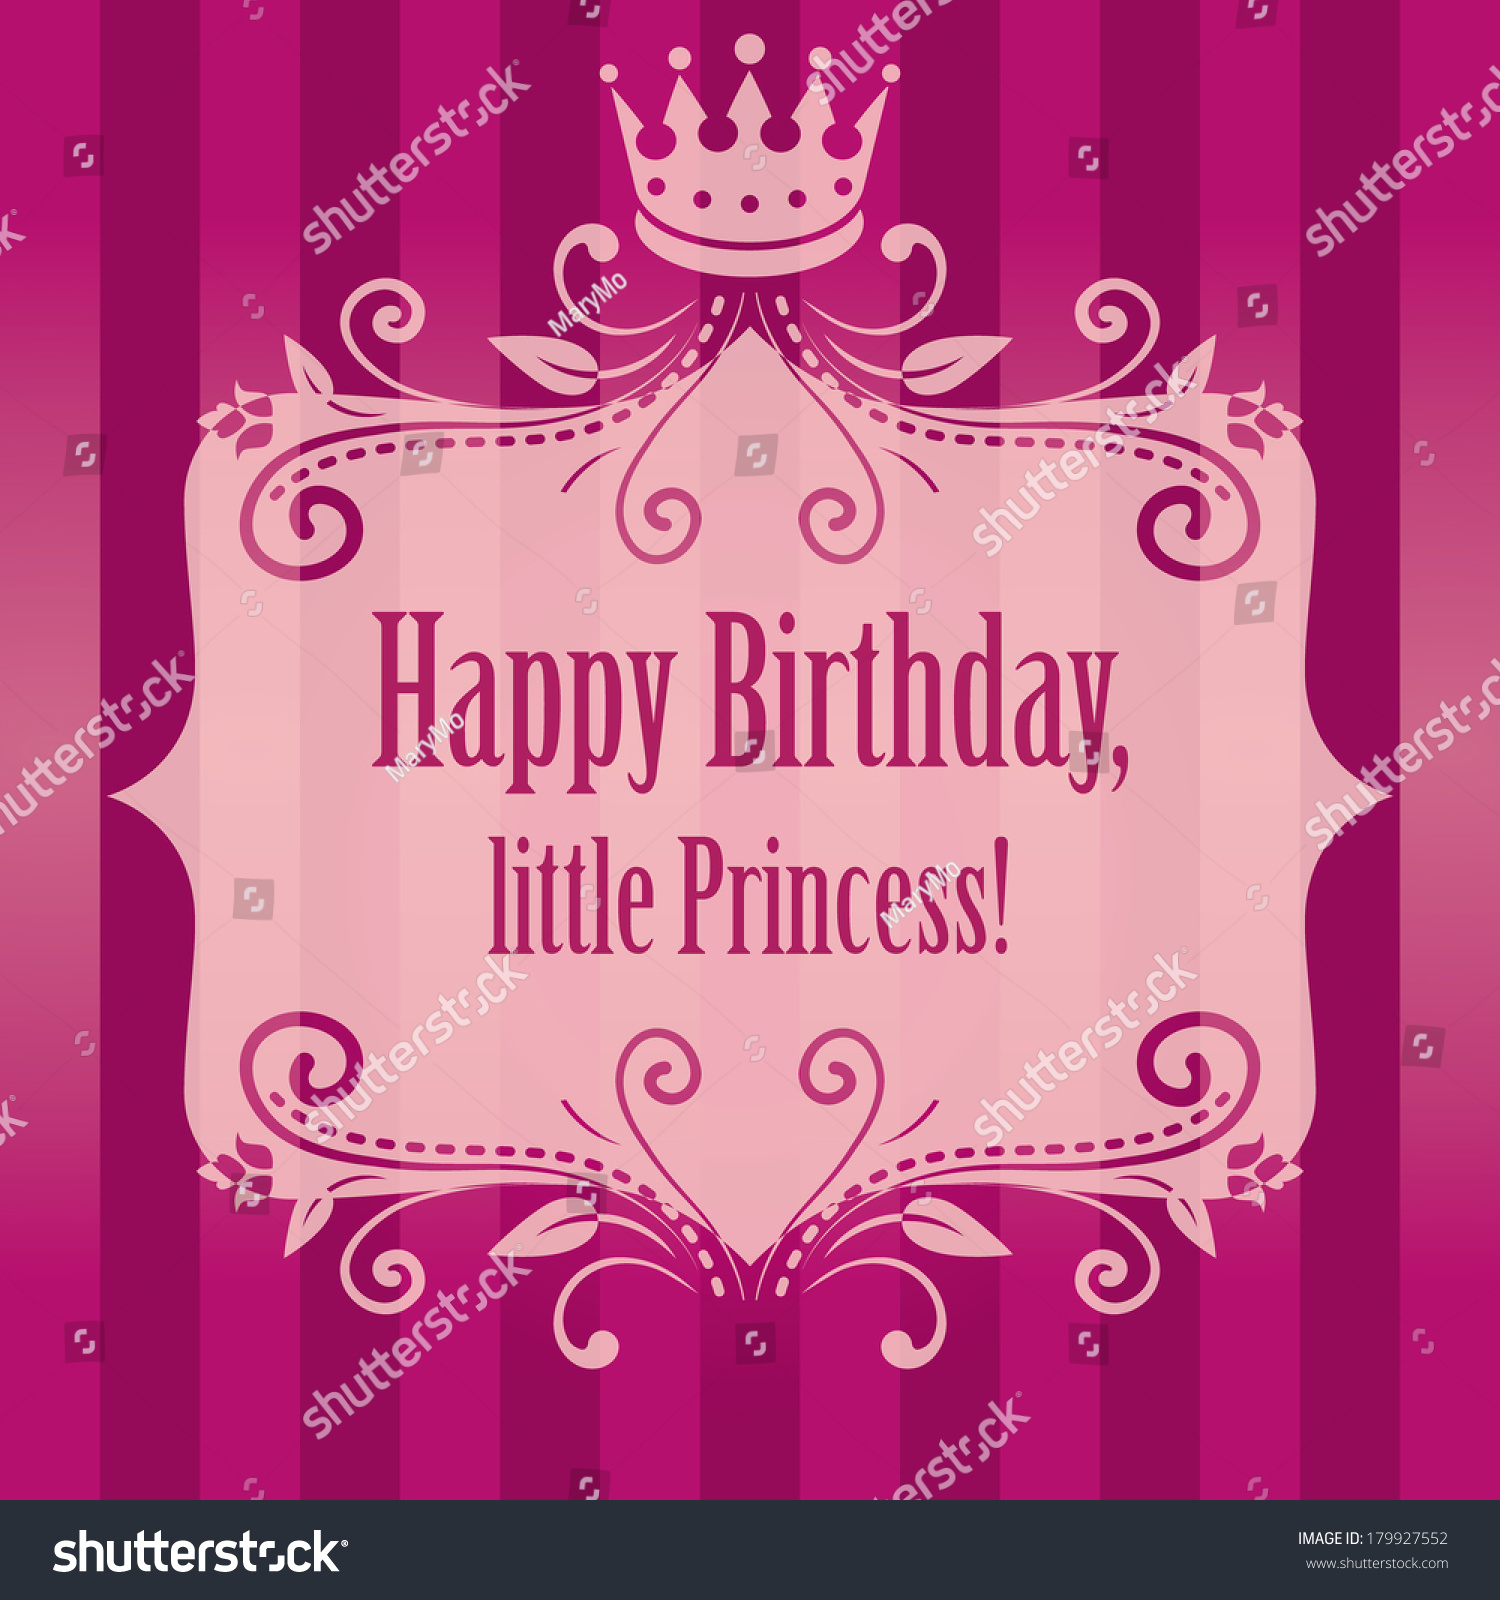 Birthday Cute Bright Pink Purple Striped Stock Vector 179927552 ...